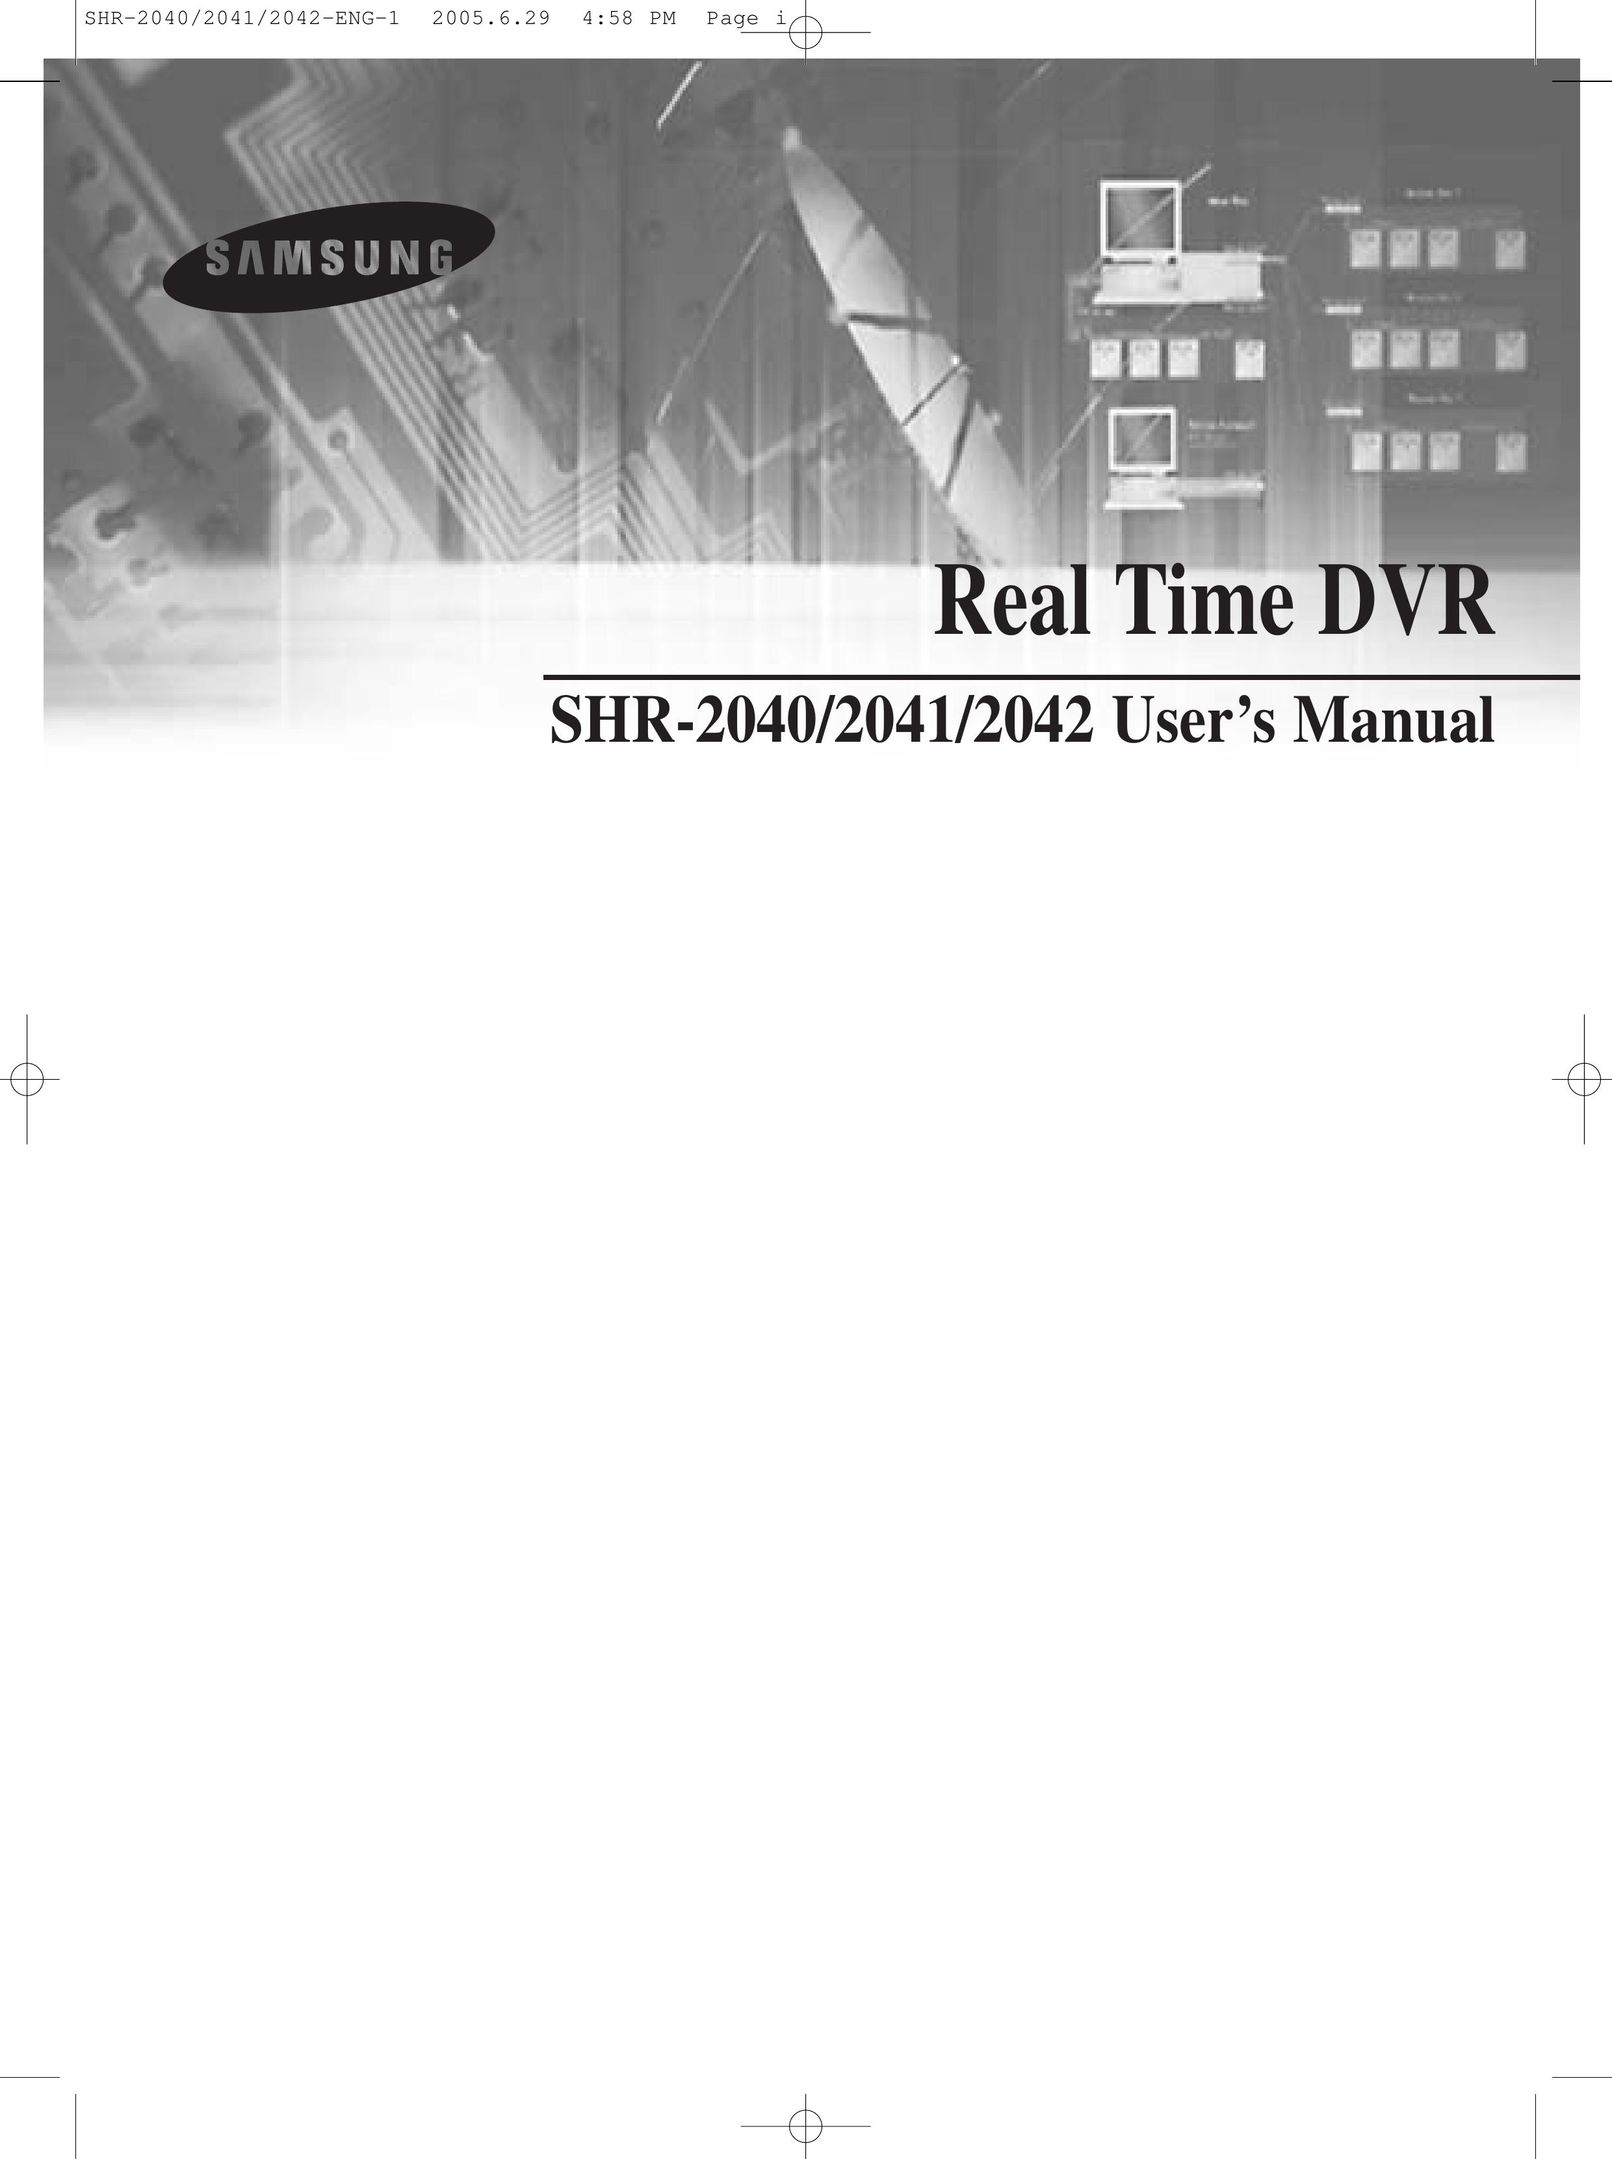 Samsung SHR-2041 DVR User Manual